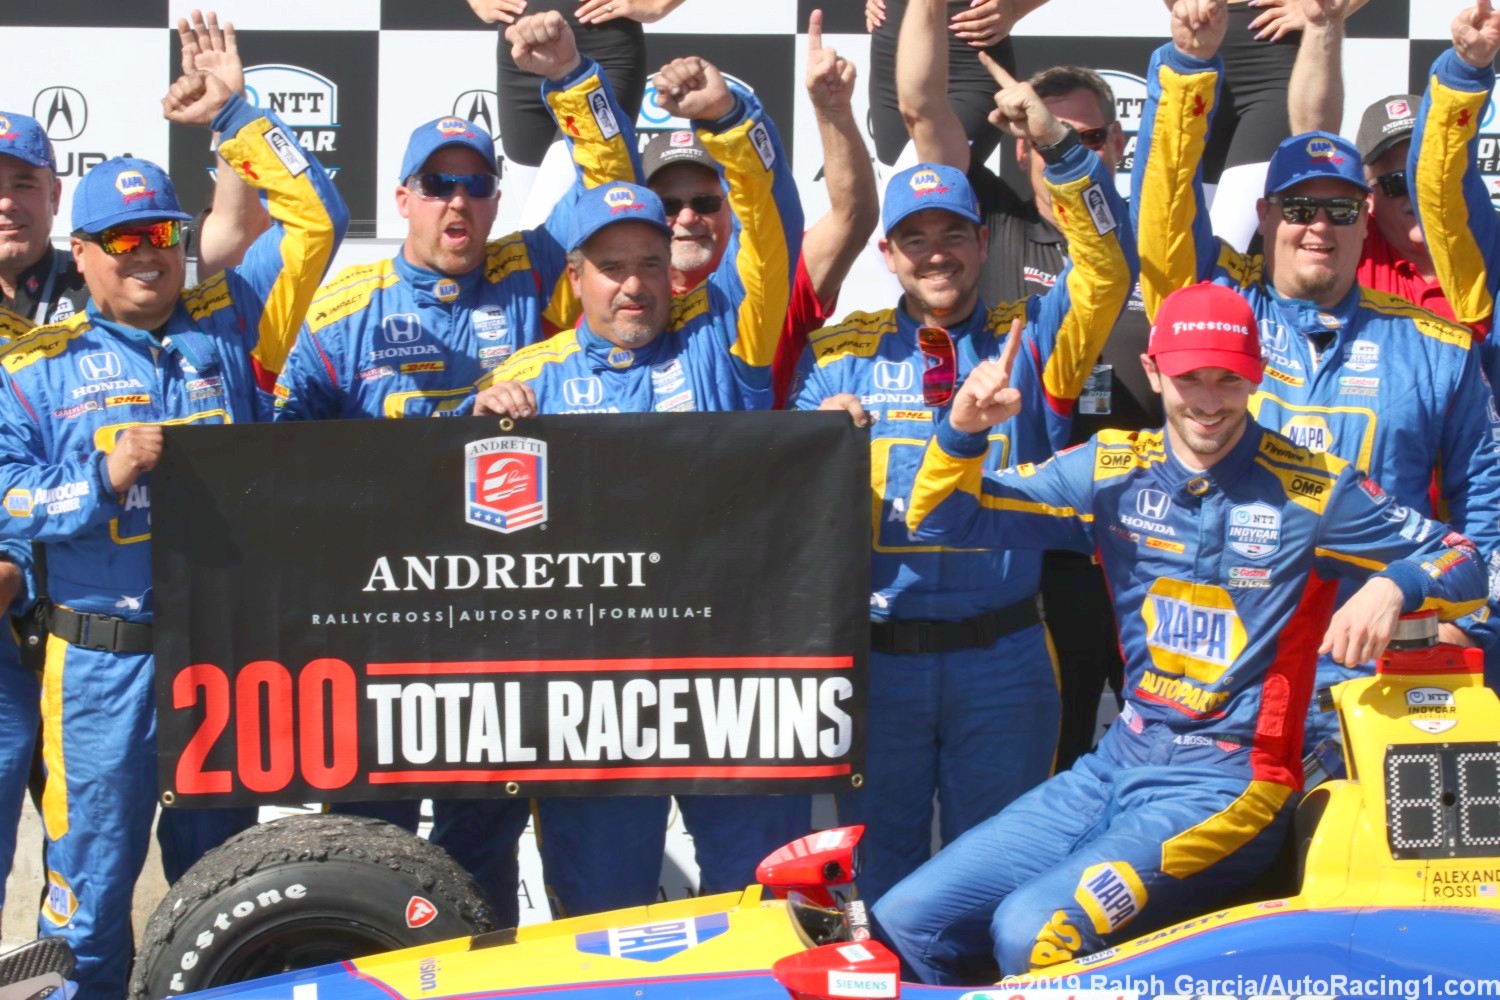 The Andretti team celebrates their 200th win